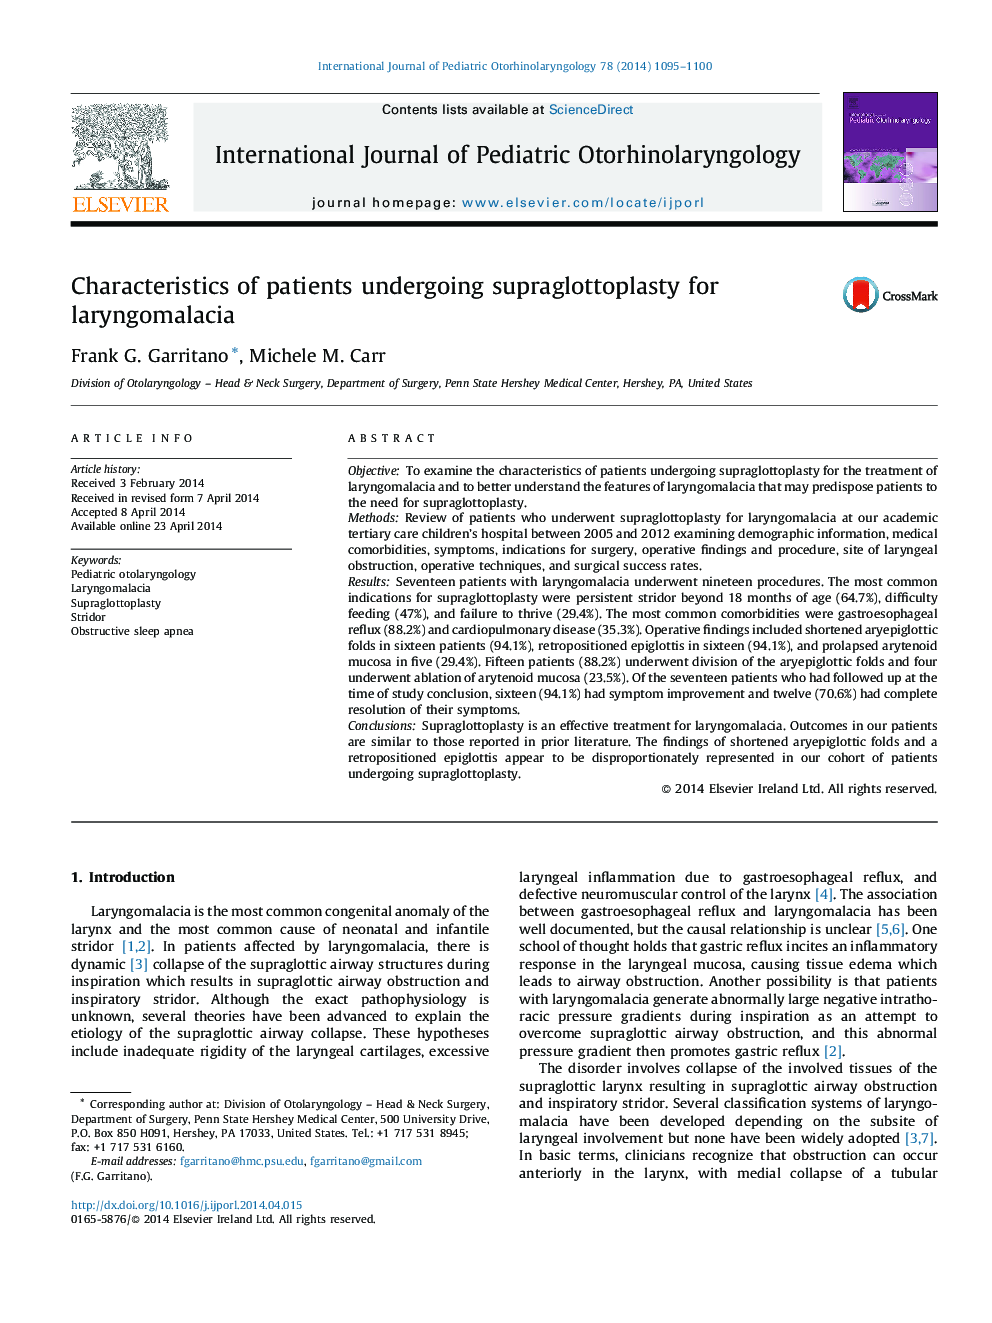 Characteristics of patients undergoing supraglottoplasty for laryngomalacia